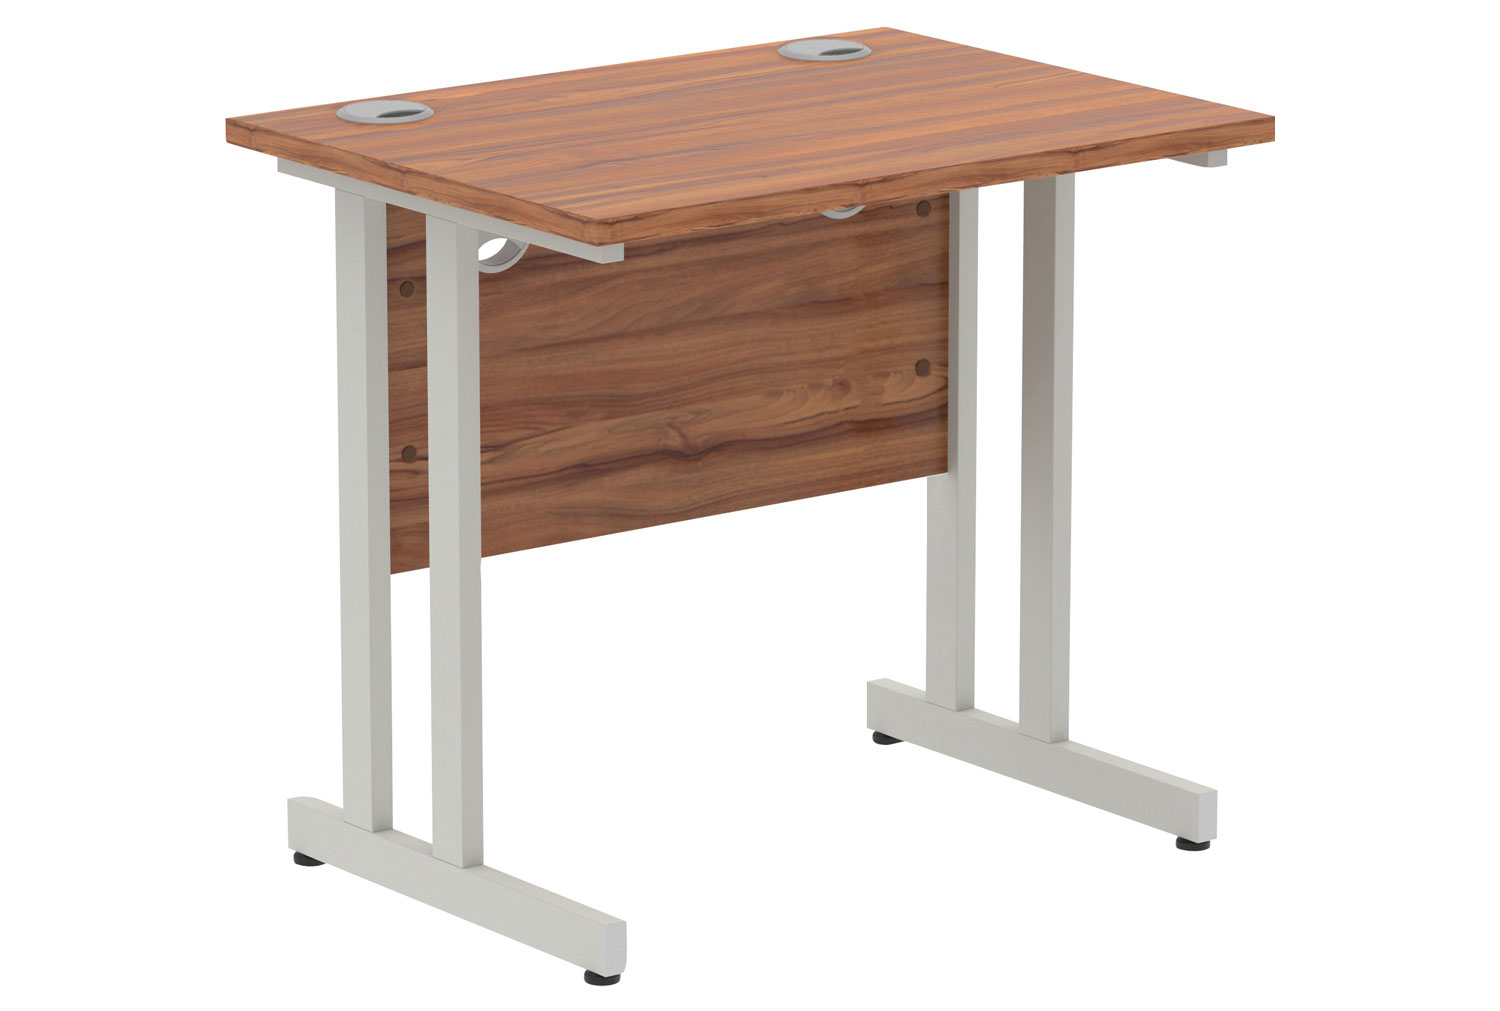 Vitali C-Leg Narrow Rectangular Office Desk (Silver Legs), 80wx60dx73h (cm), Walnut, Fully Installed